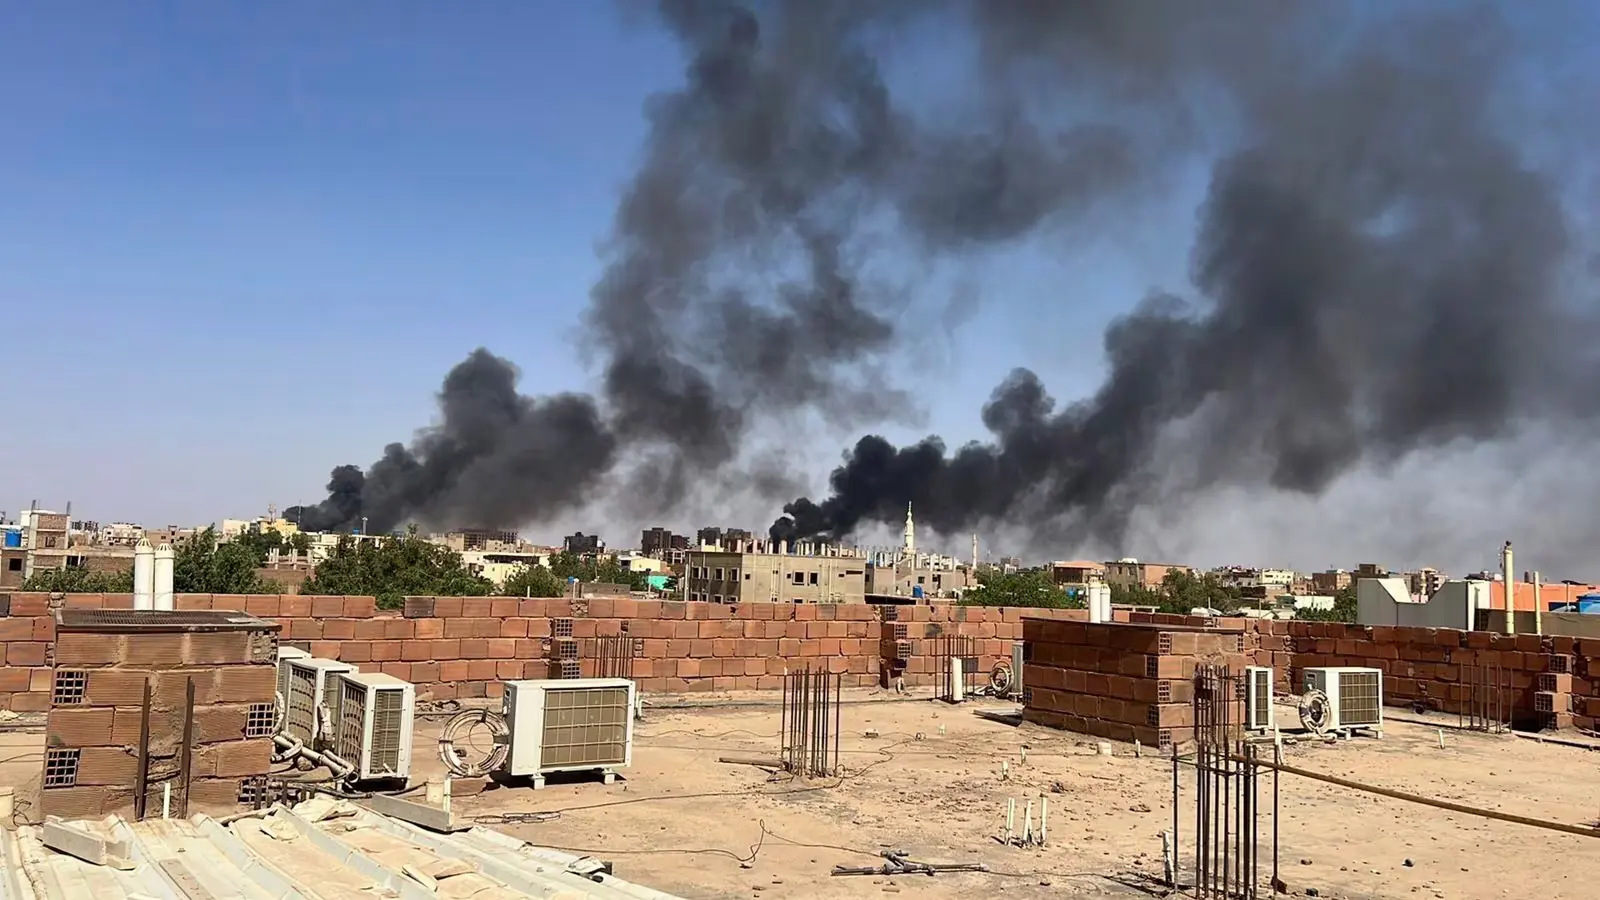 U.S. Embassy Staff Evacuation - War-Torn Sudan Crisis Update